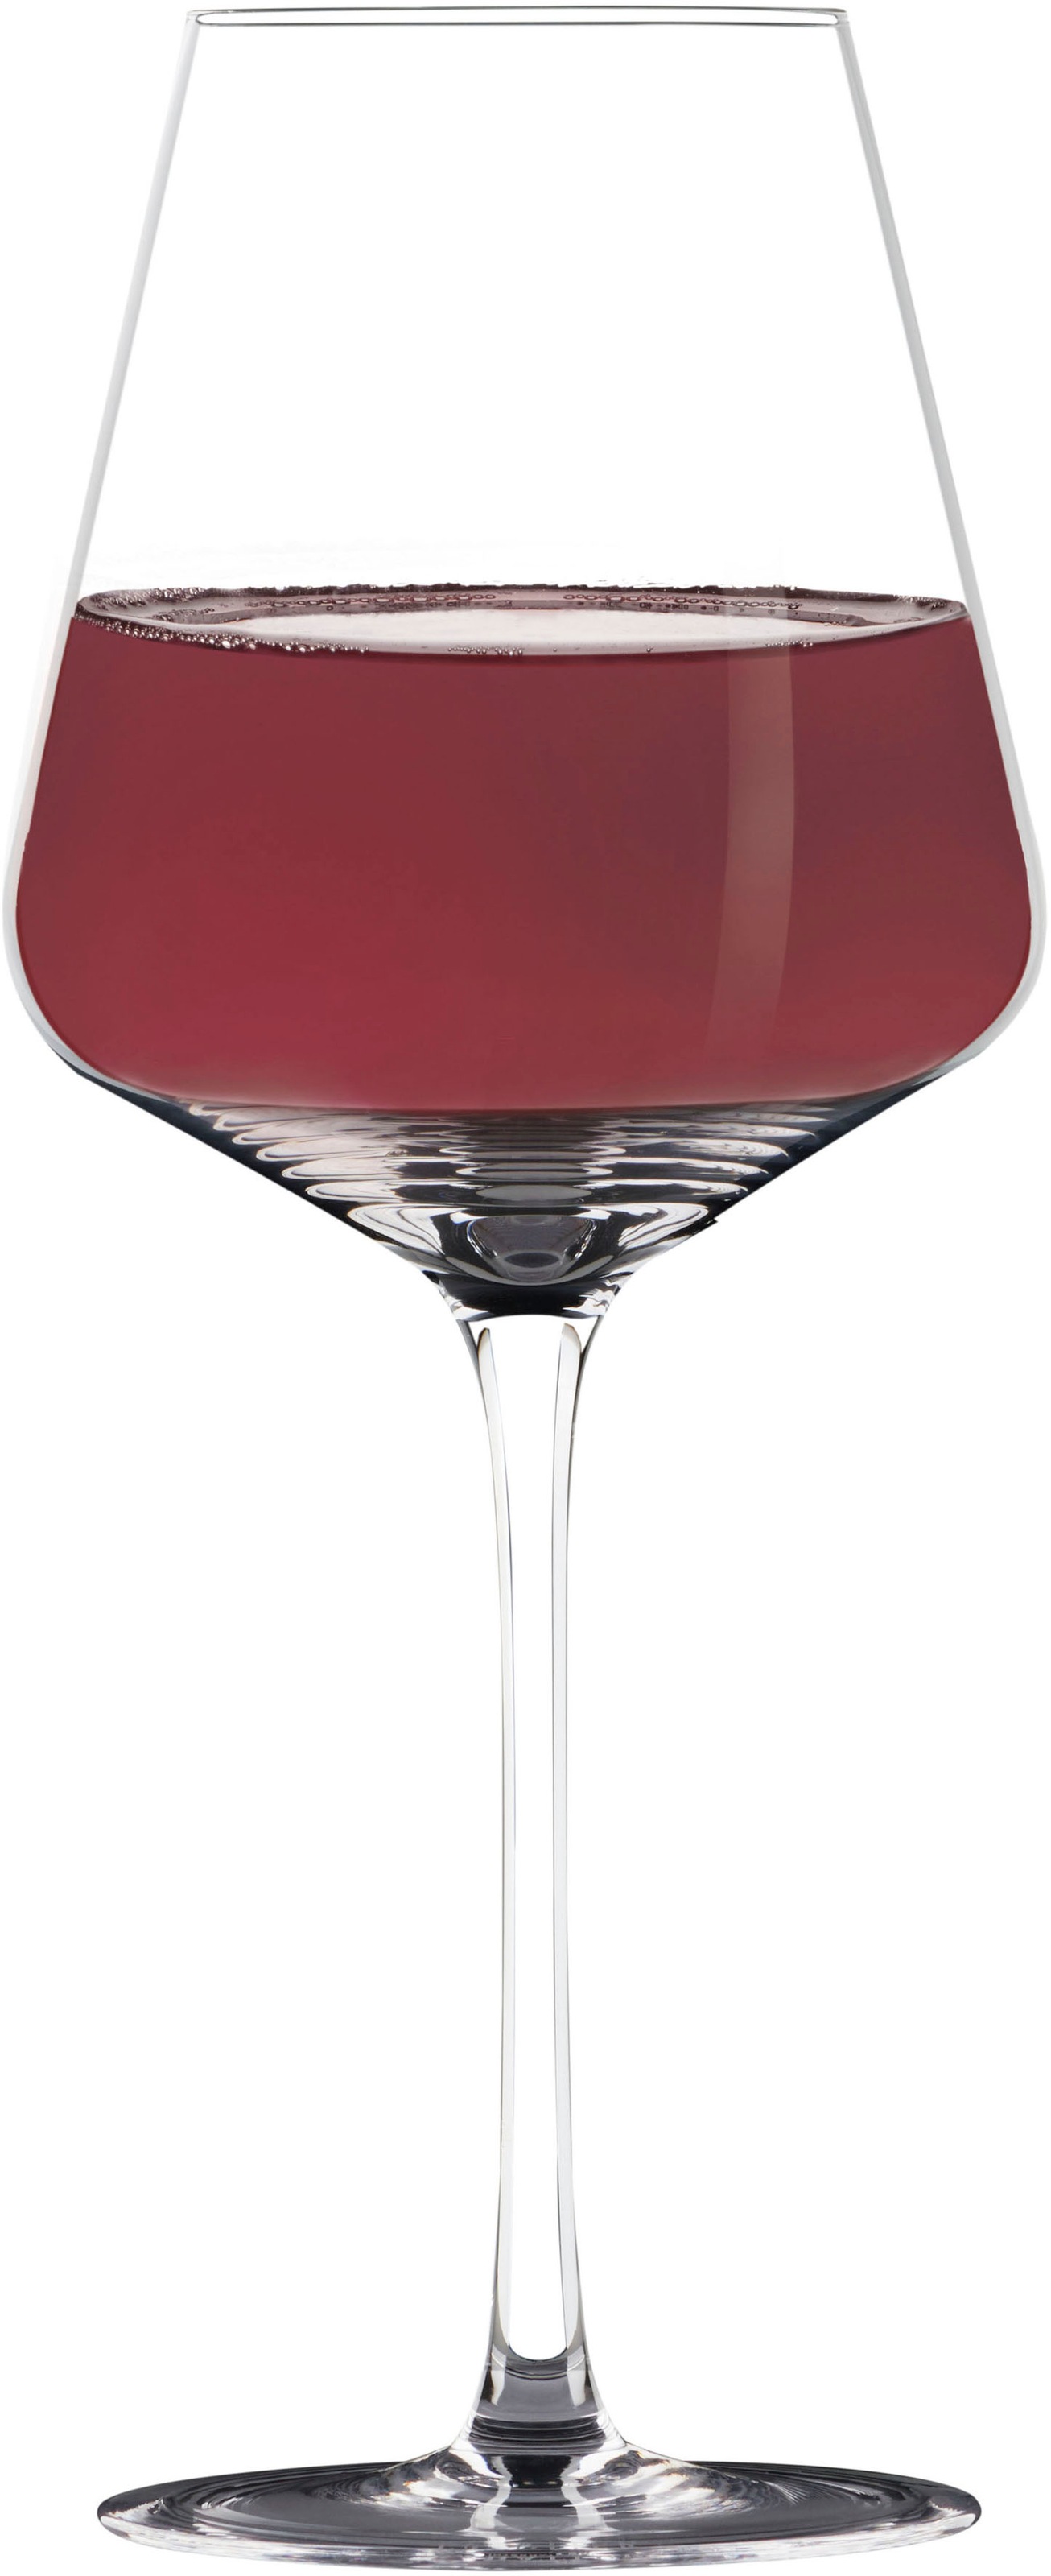 SABATIER International Rotweinglas, (Set, 2 tlg., 2 x Rotwein Kristallglas), Inhalt 700 ml, 2-teilig